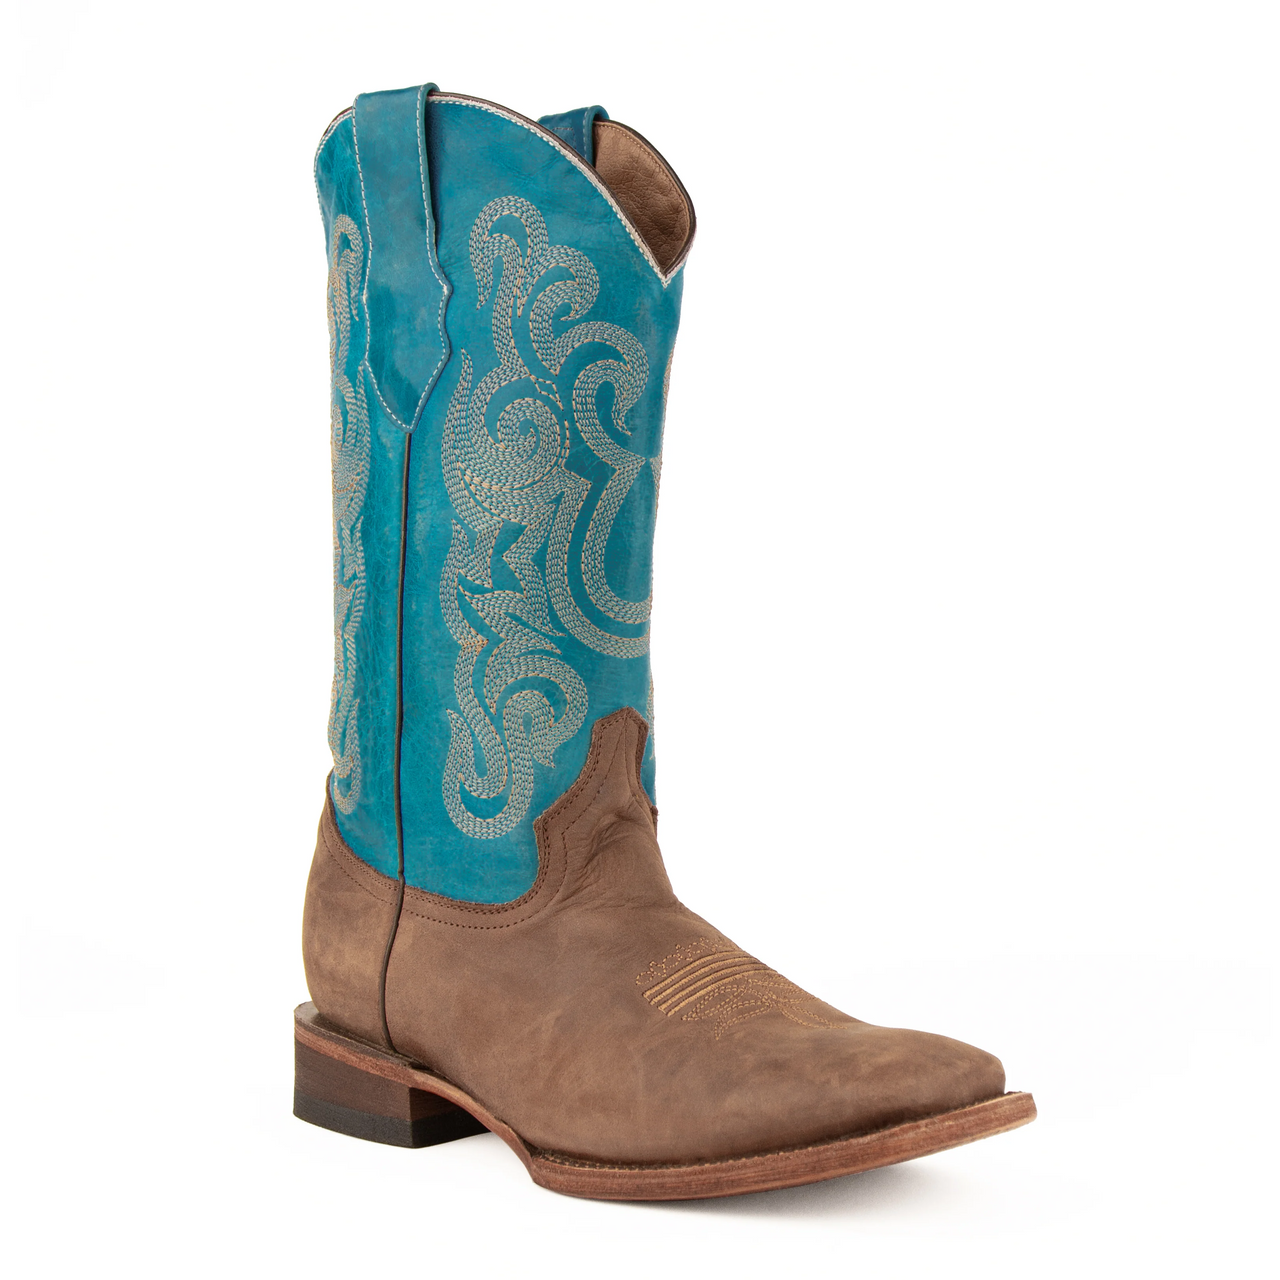 Ferrini Mens Hunter Western Boots - Chocolate/Turquoise